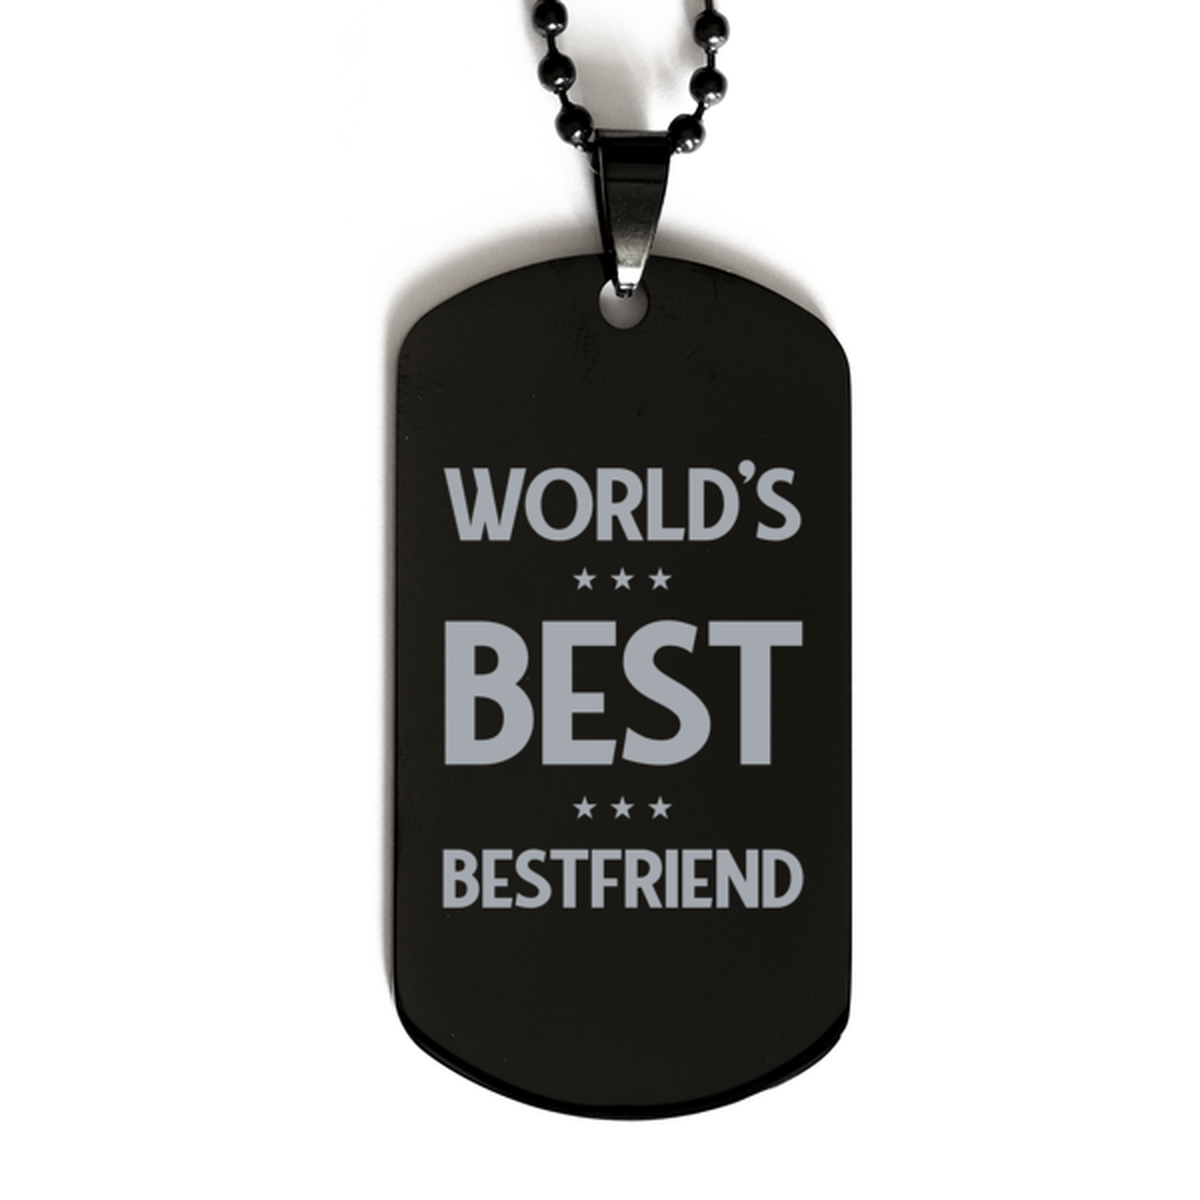 Worlds Best Bestfriend Gifts, Funny Black Engraved Dog Tag For Bestfriend, Birthday Presents For Men Women